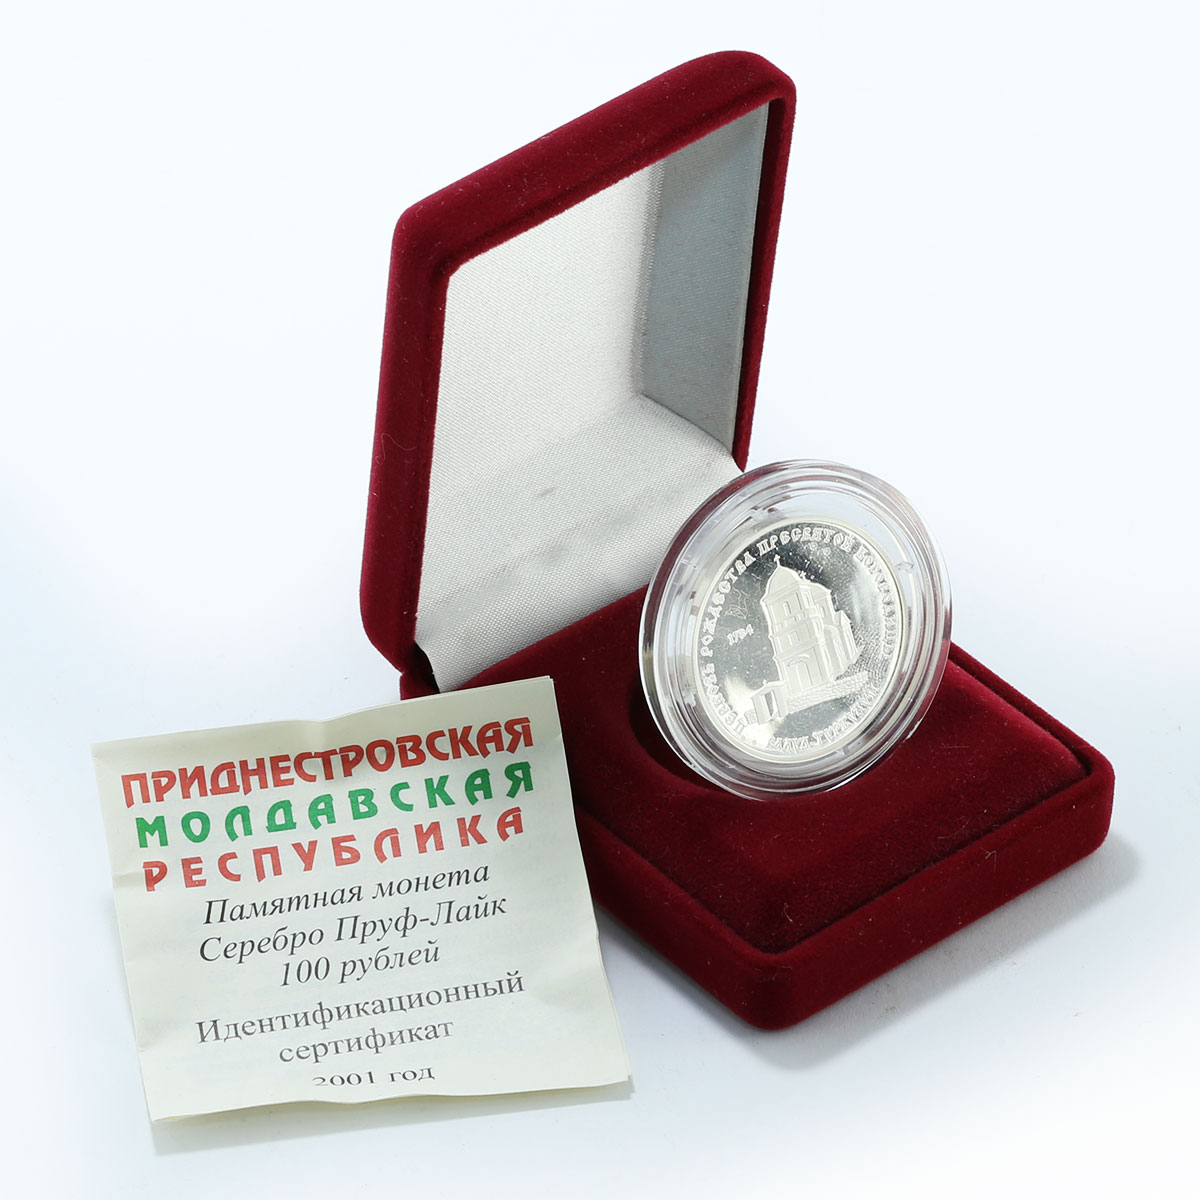 Transnistria Moldova 100 roubles Church Nativity of the Virgin silver coin 2001